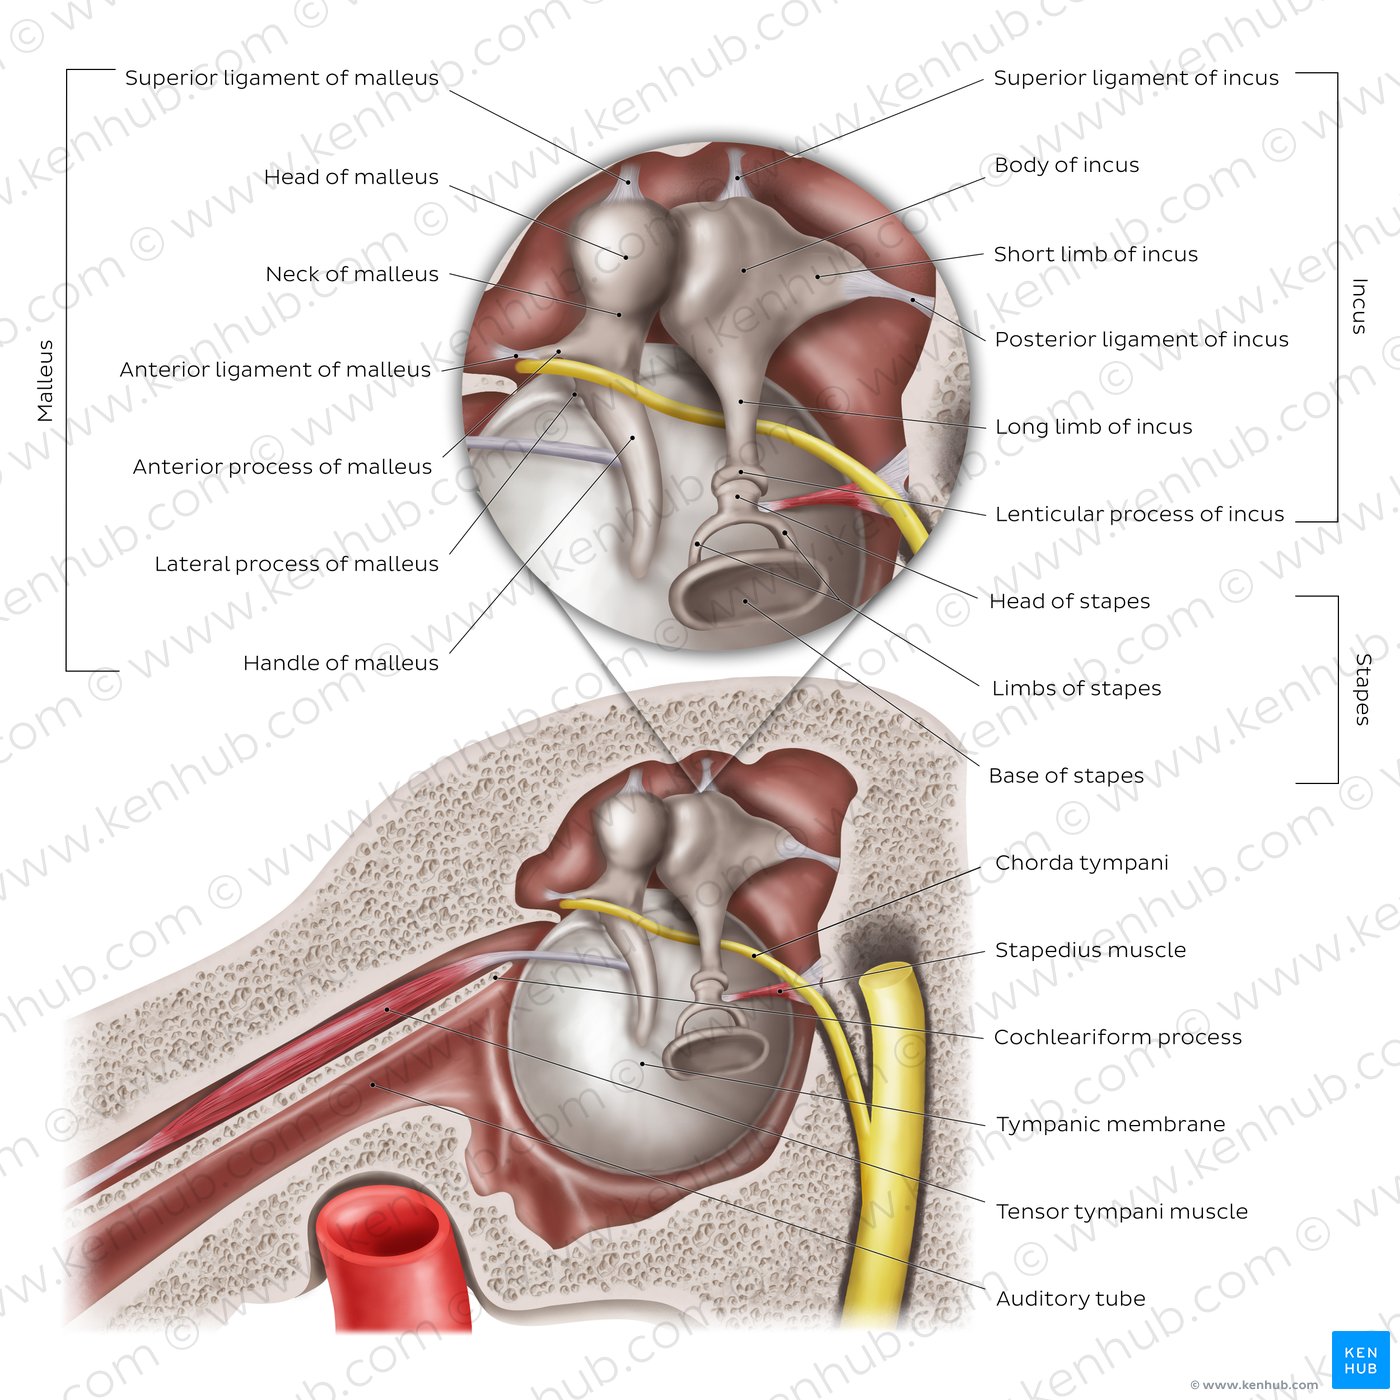 Middle ear: Sagittal section